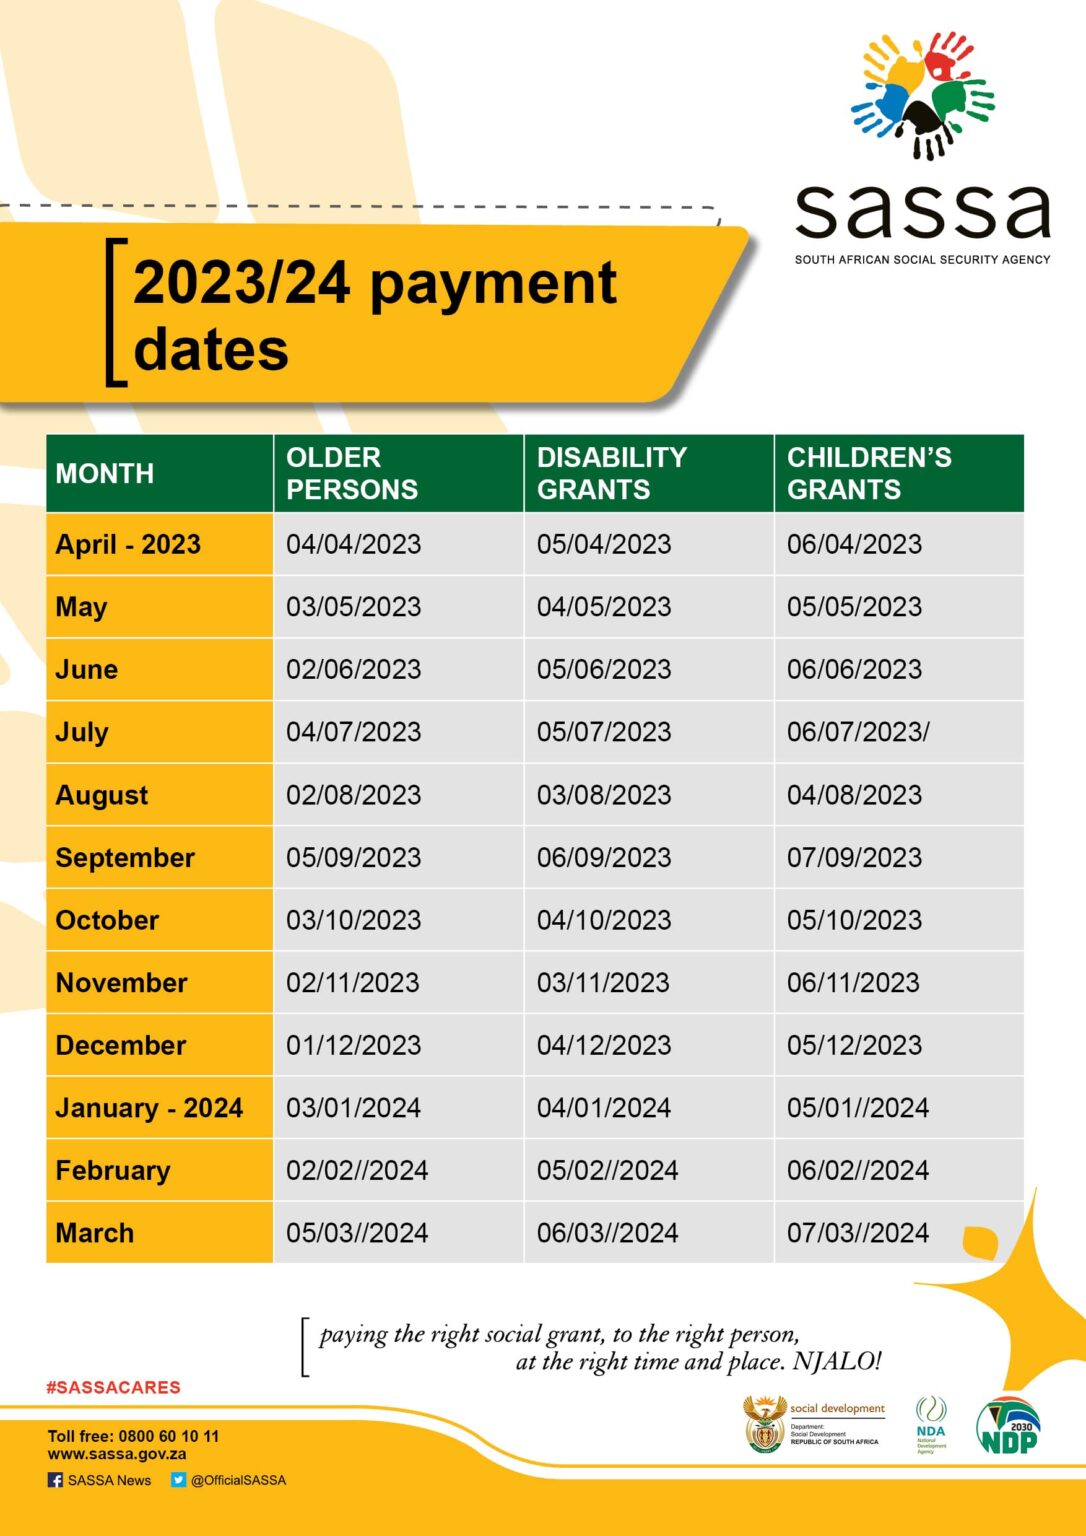 Sassa Payment Dates 2023 2024 1086x1536 